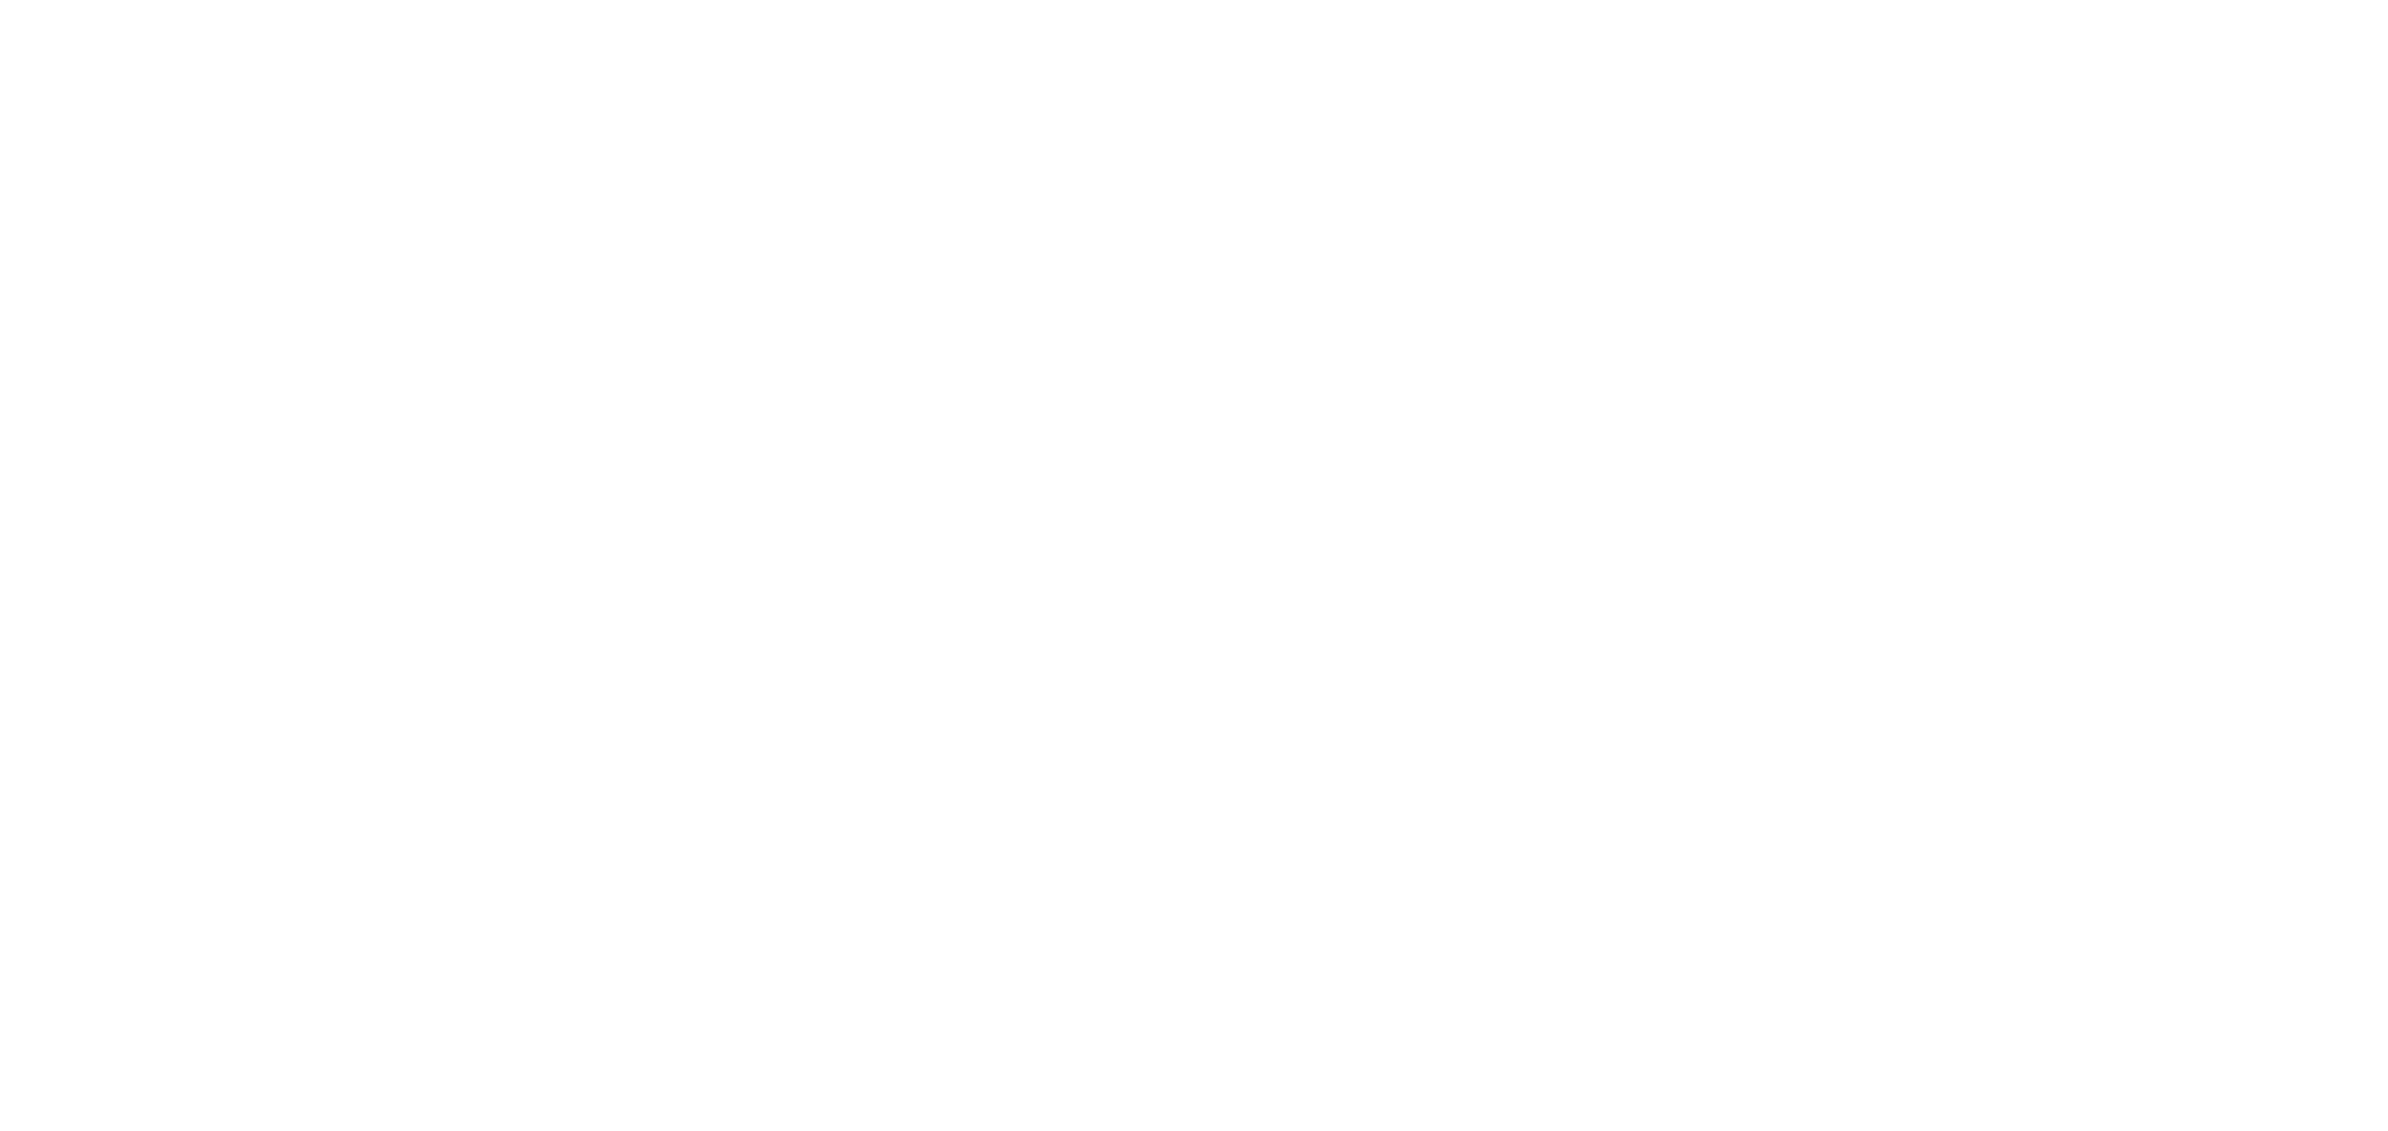 Explore Southeast Saskatchewan